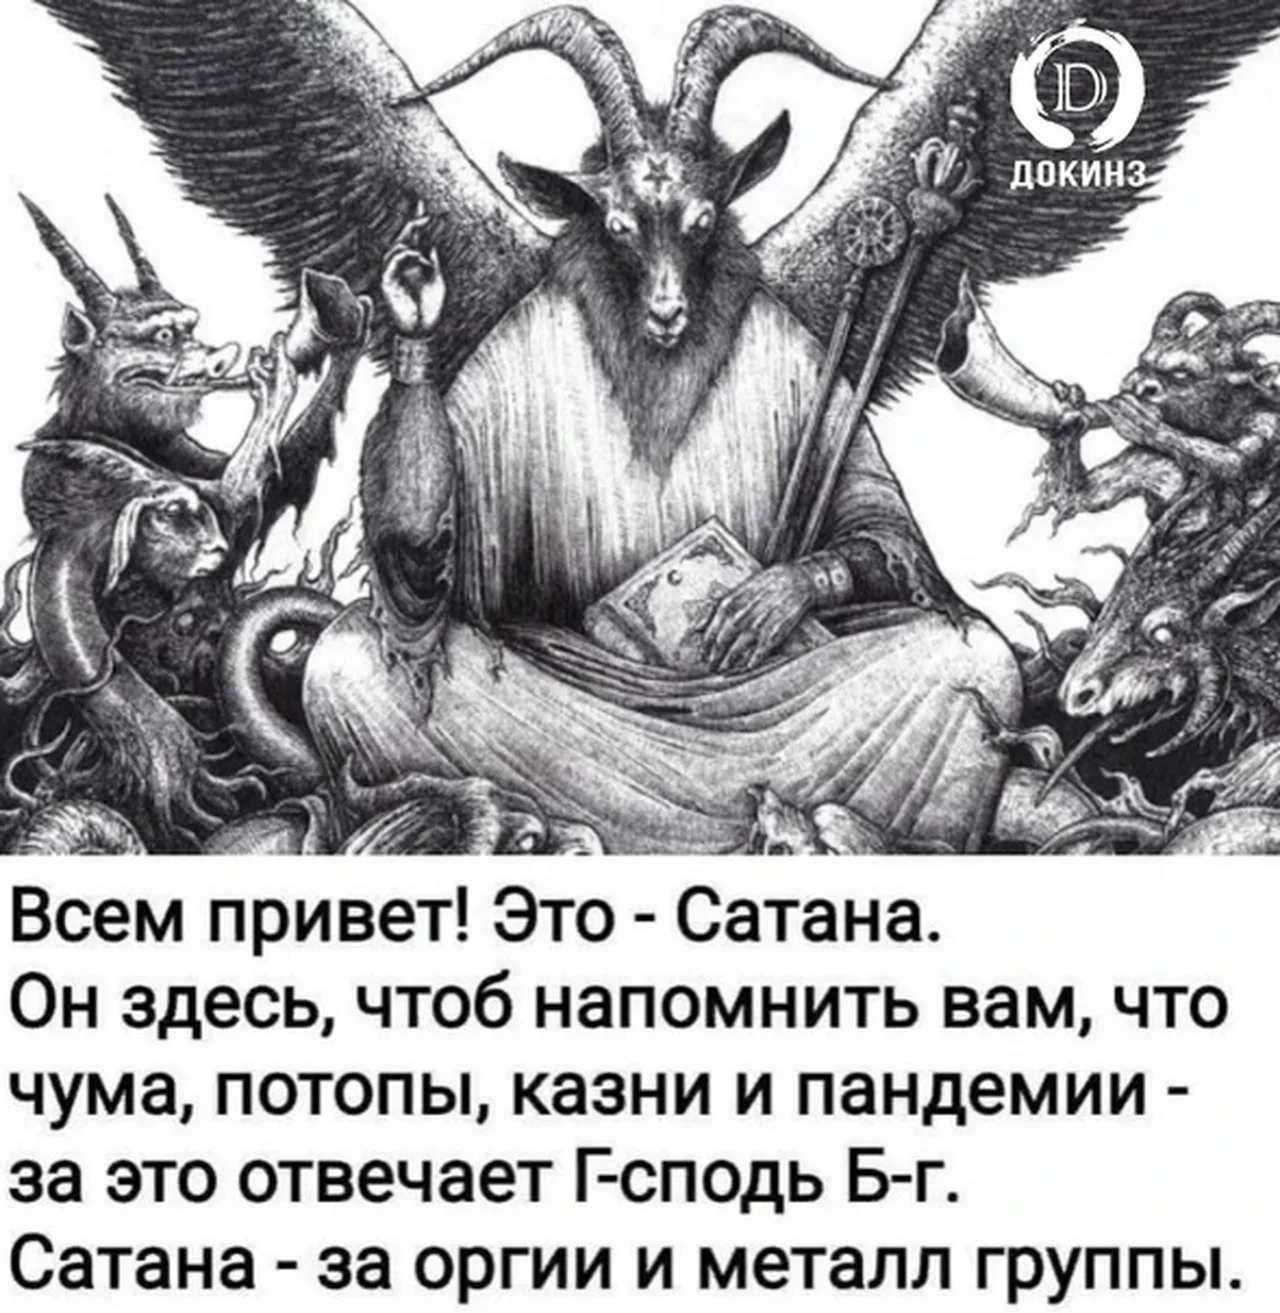 Жалкое существо. Божество дьявол. Бафомет сатанинский демон?. Бог и сатана. Библейские демоны.